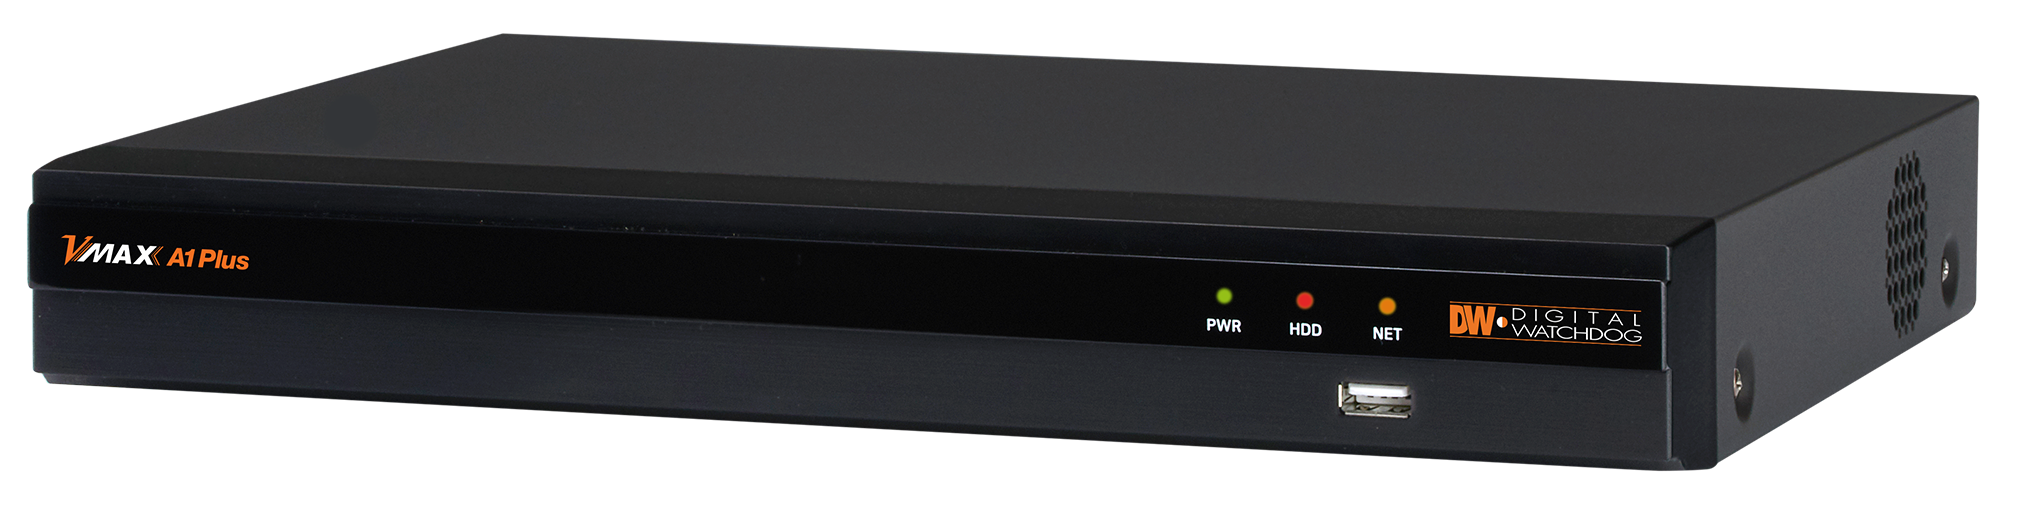 Digital Watchdog DW-VA1P81T  UHDoC - DVR 8ch 8 Channel Universal HD Over Coax DVR